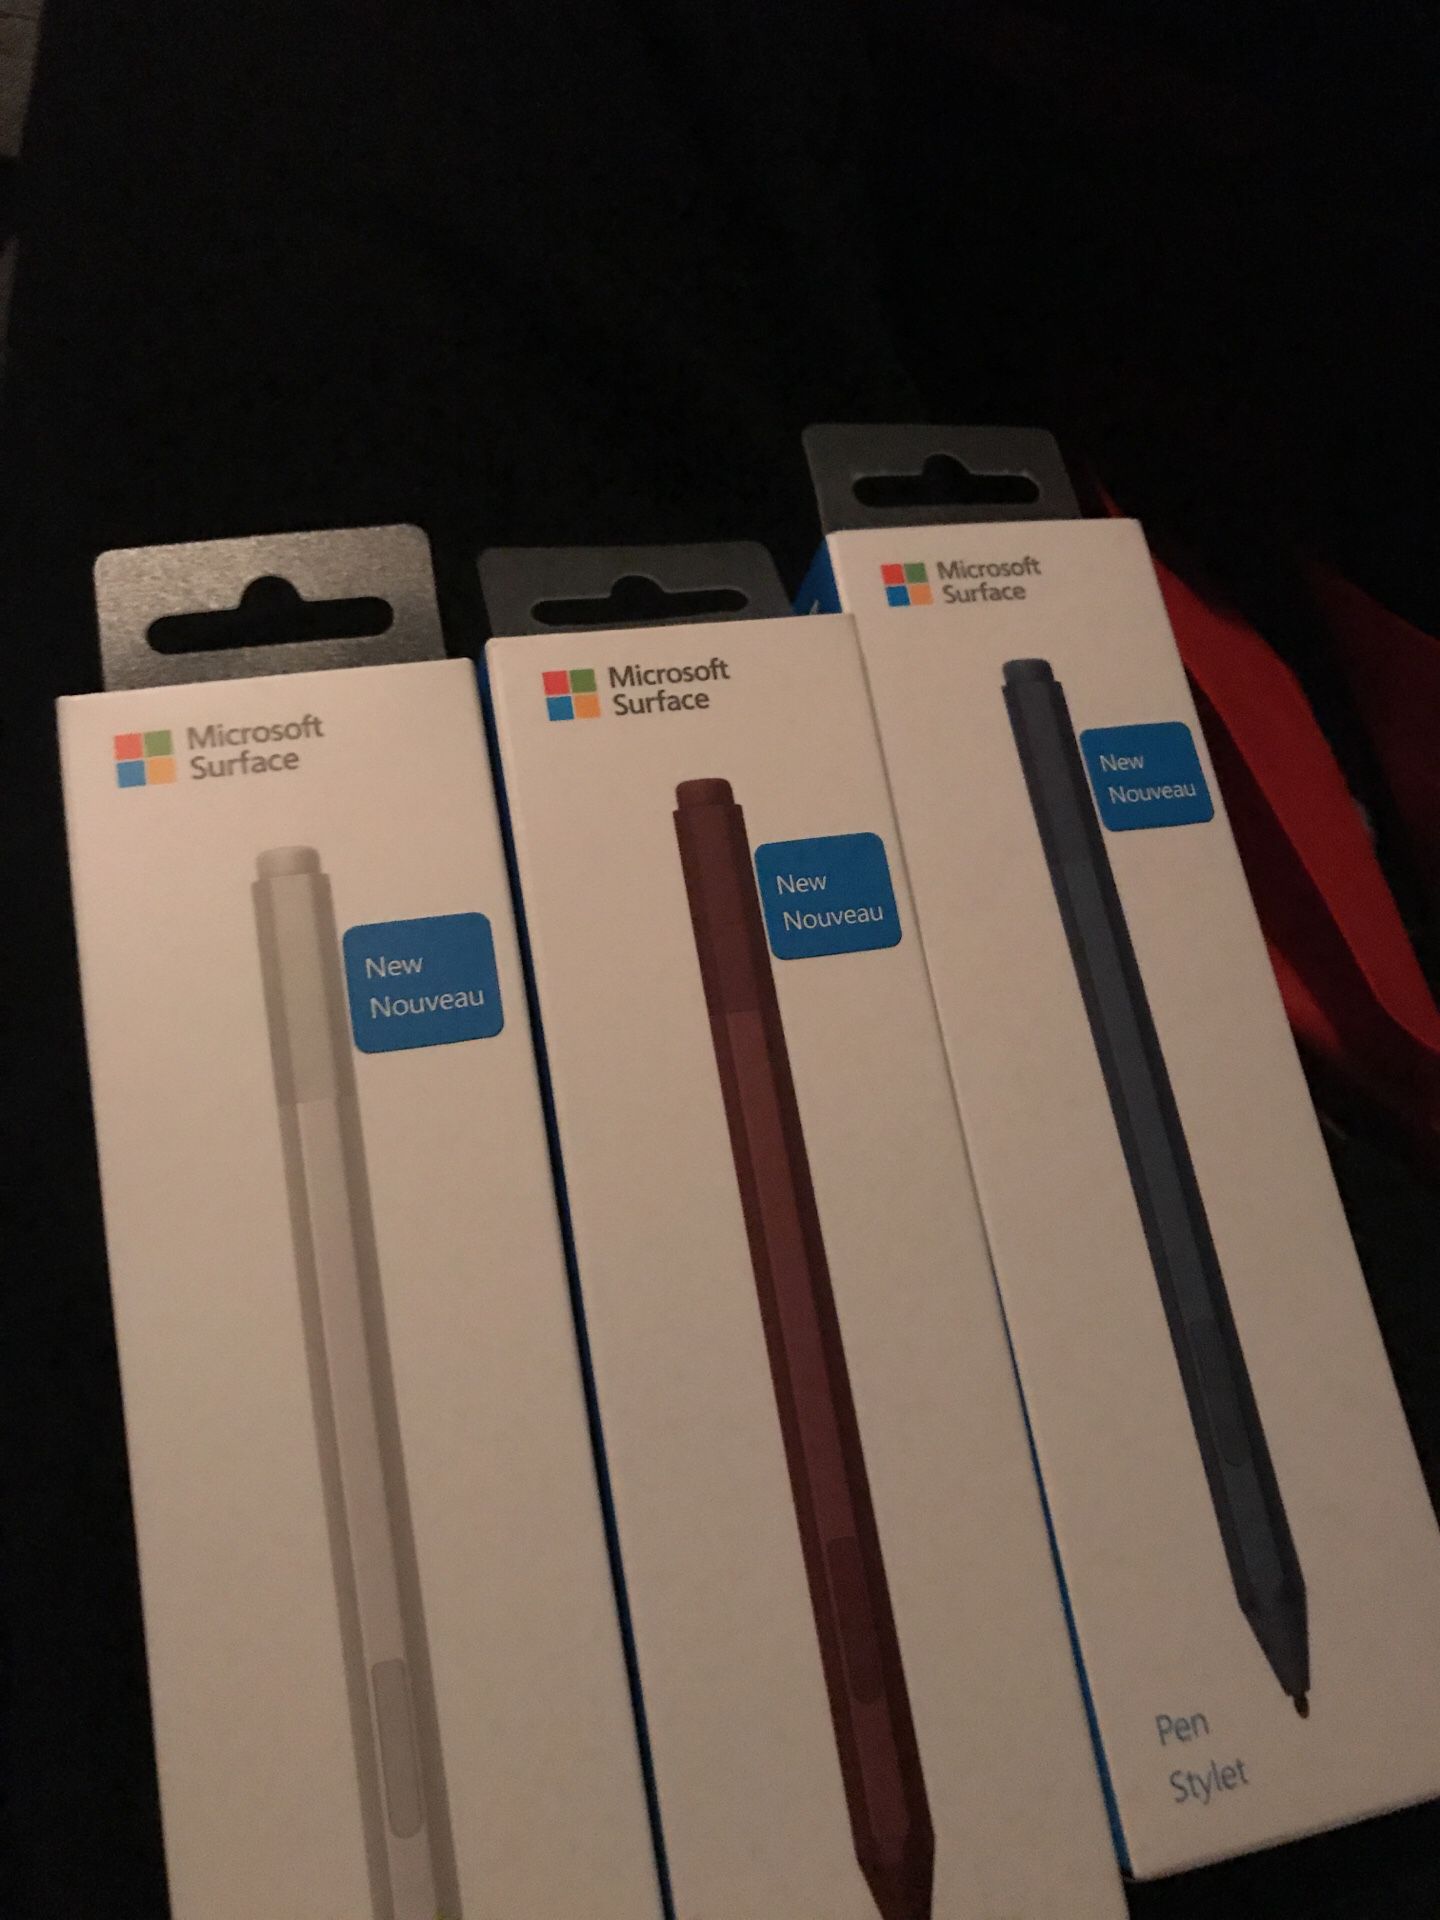 Microsoft surface pens